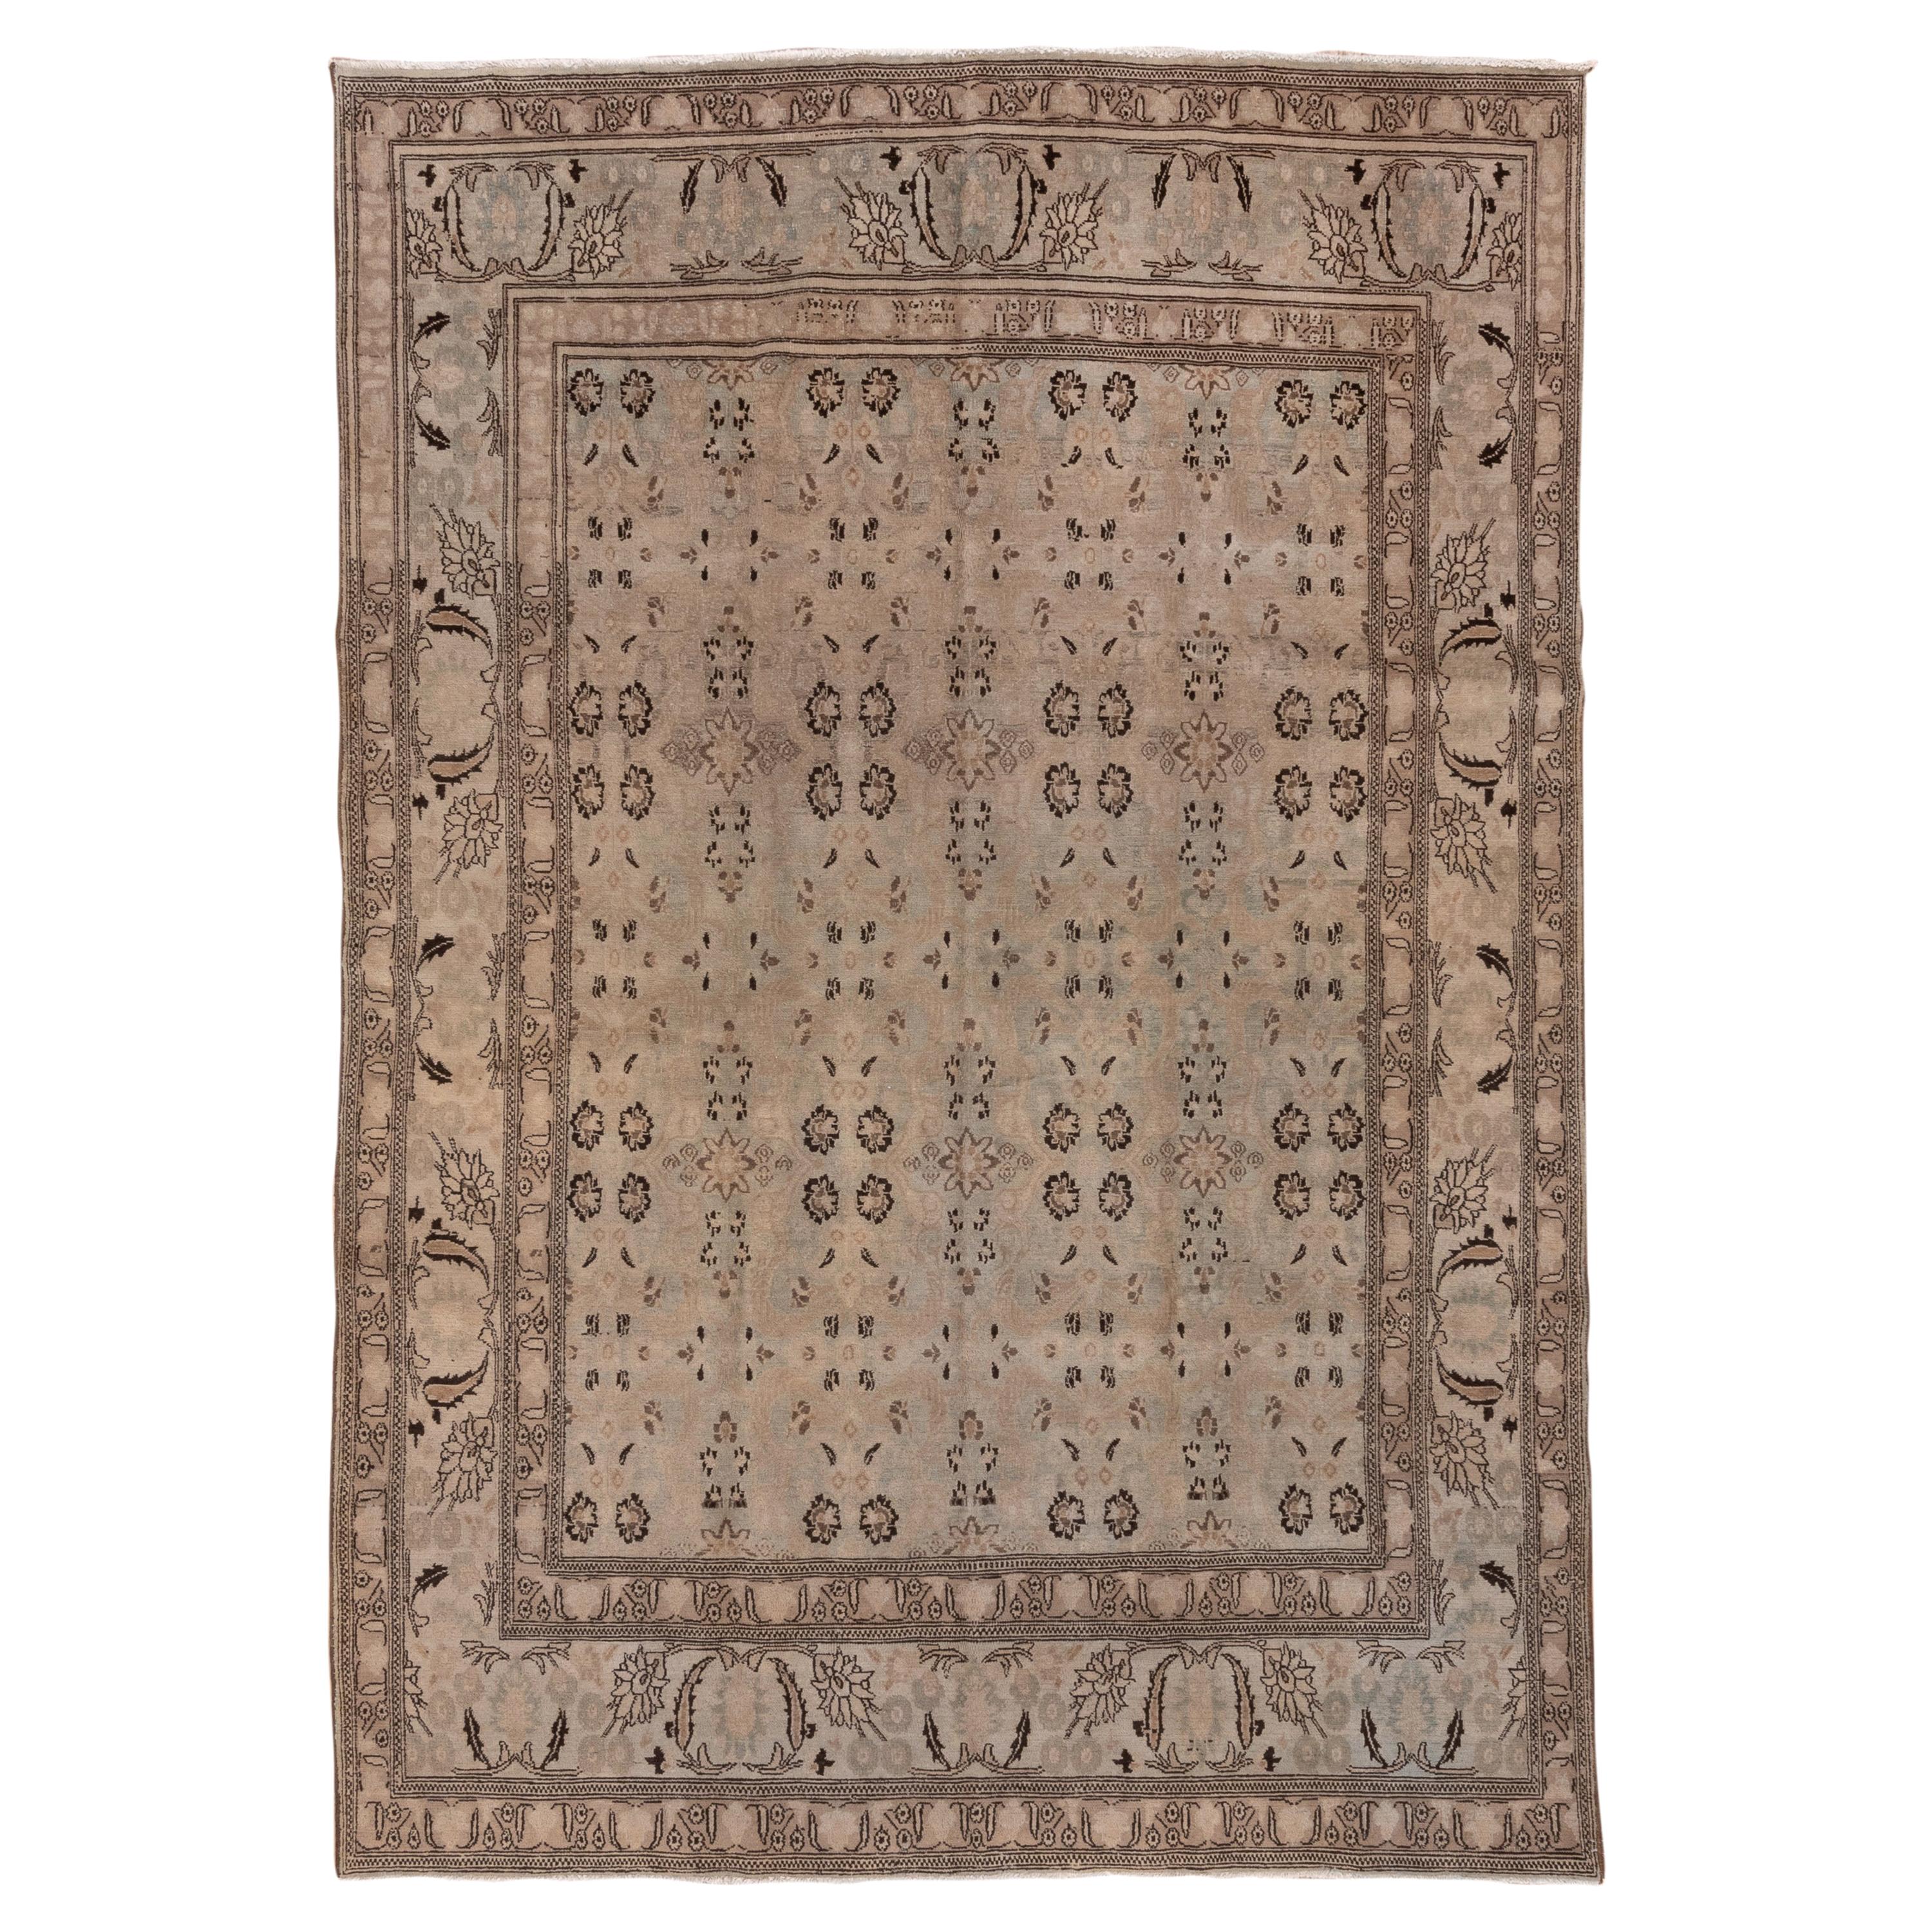 Antique Persian Khorassan Carpet, Light Brown Field, Allover Field, Blue Accents